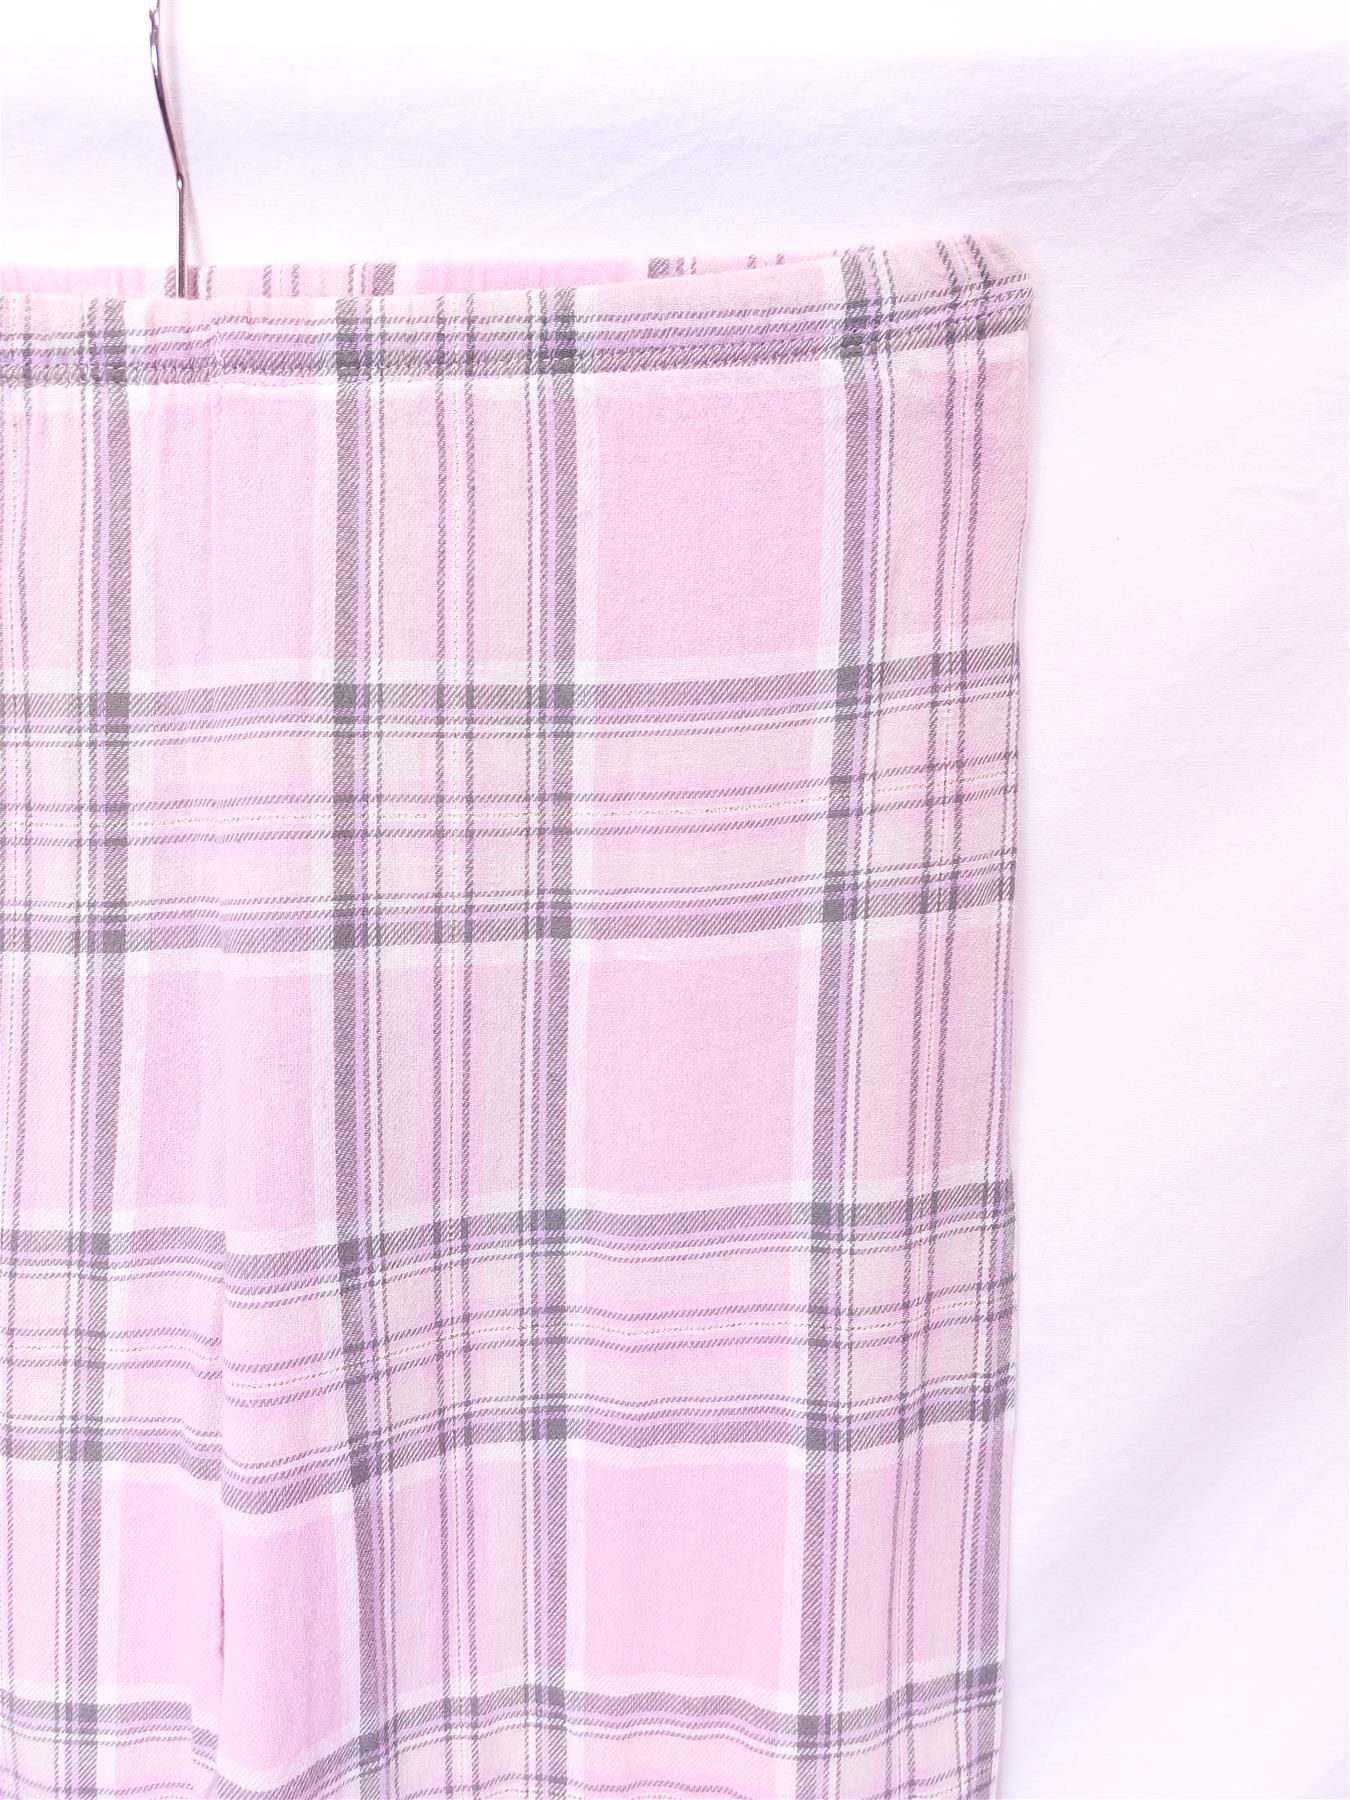 Women's Cotton Pyjama Bottoms Pink Check Sparkly Thread Soft Comfy PJ Pants 8-24